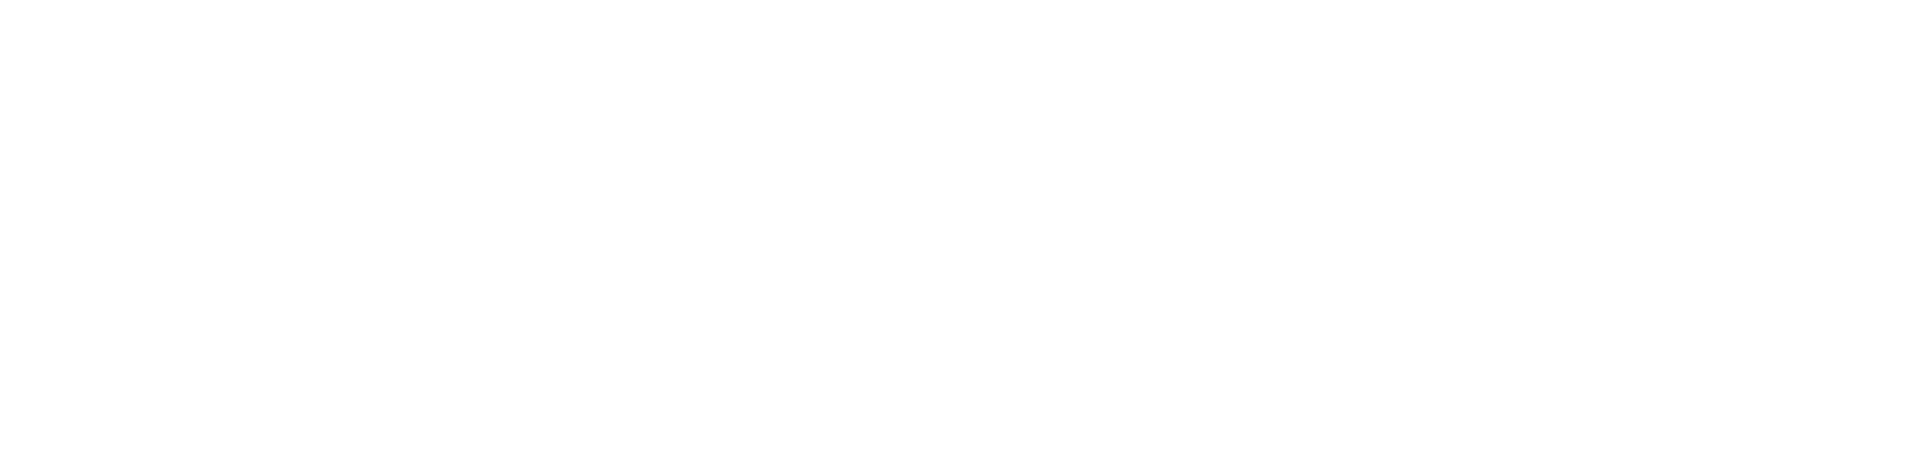 JacksonJetCenter_logo_UPDATE-White-notag